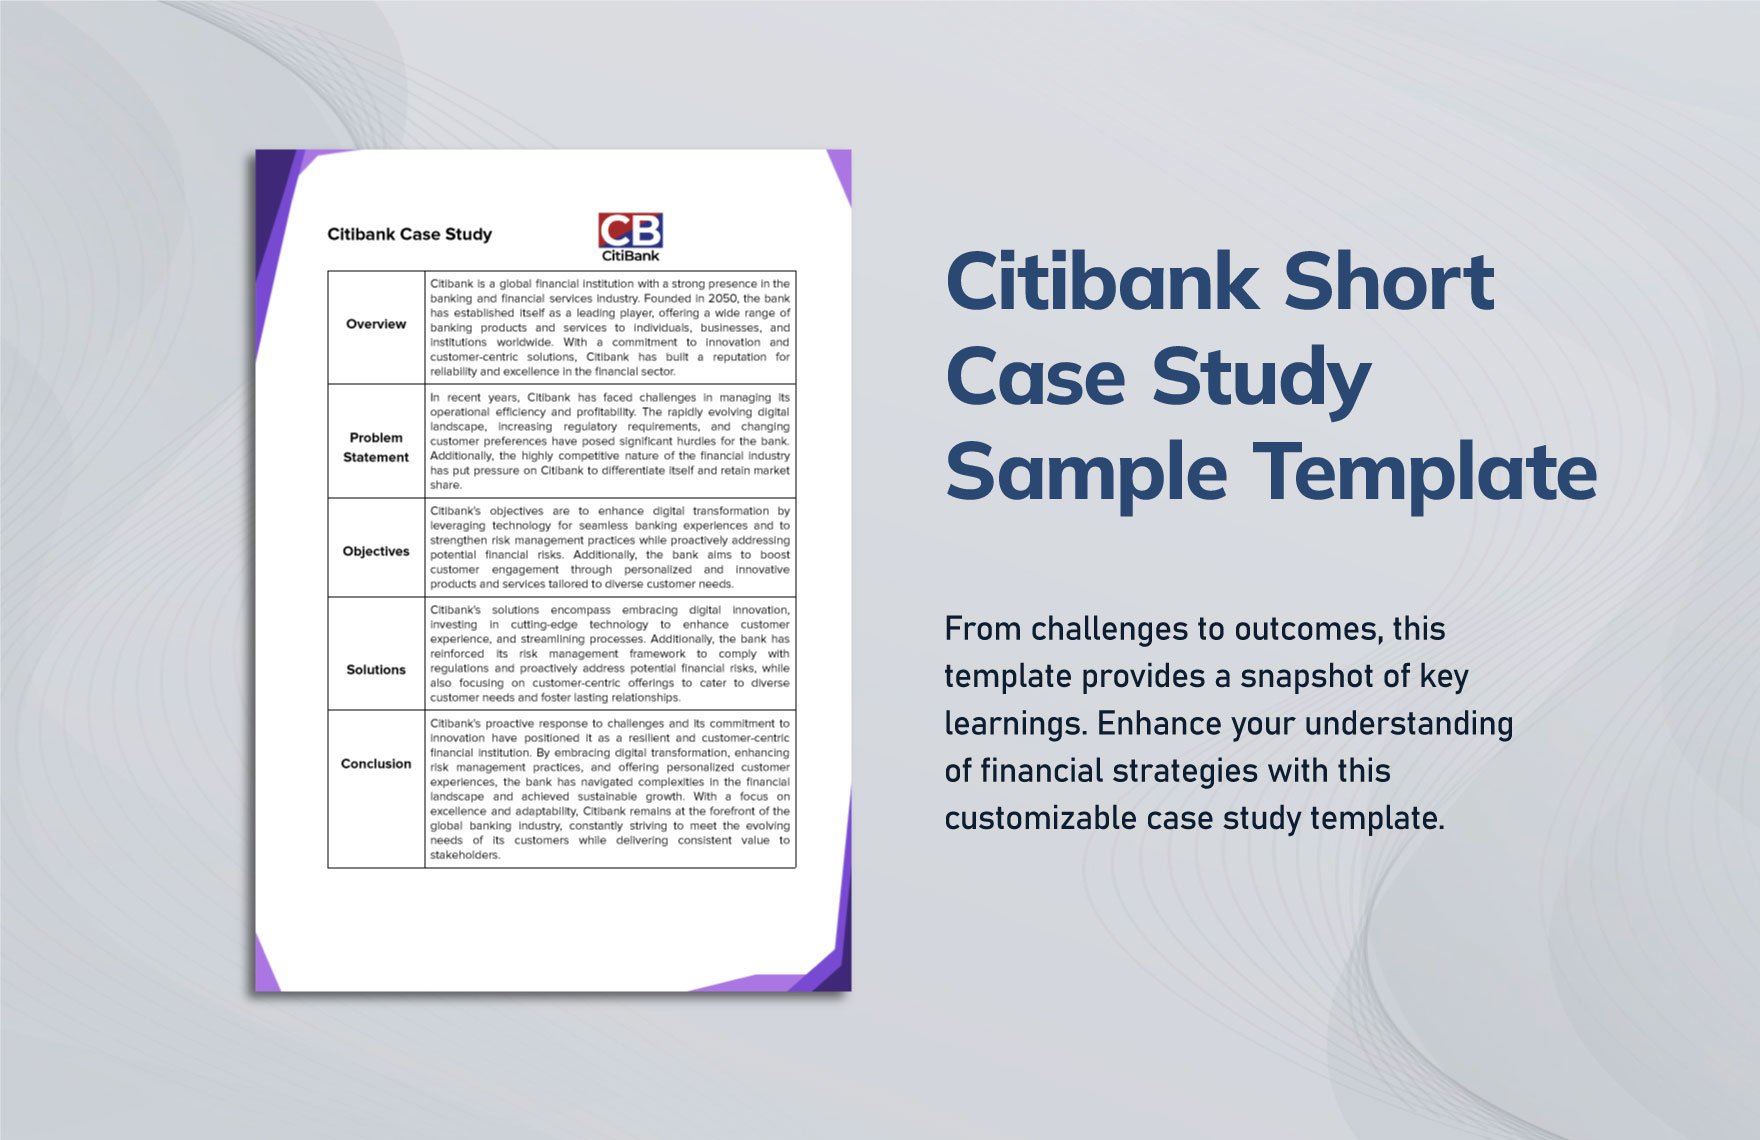 citibank-short-case-study-sample